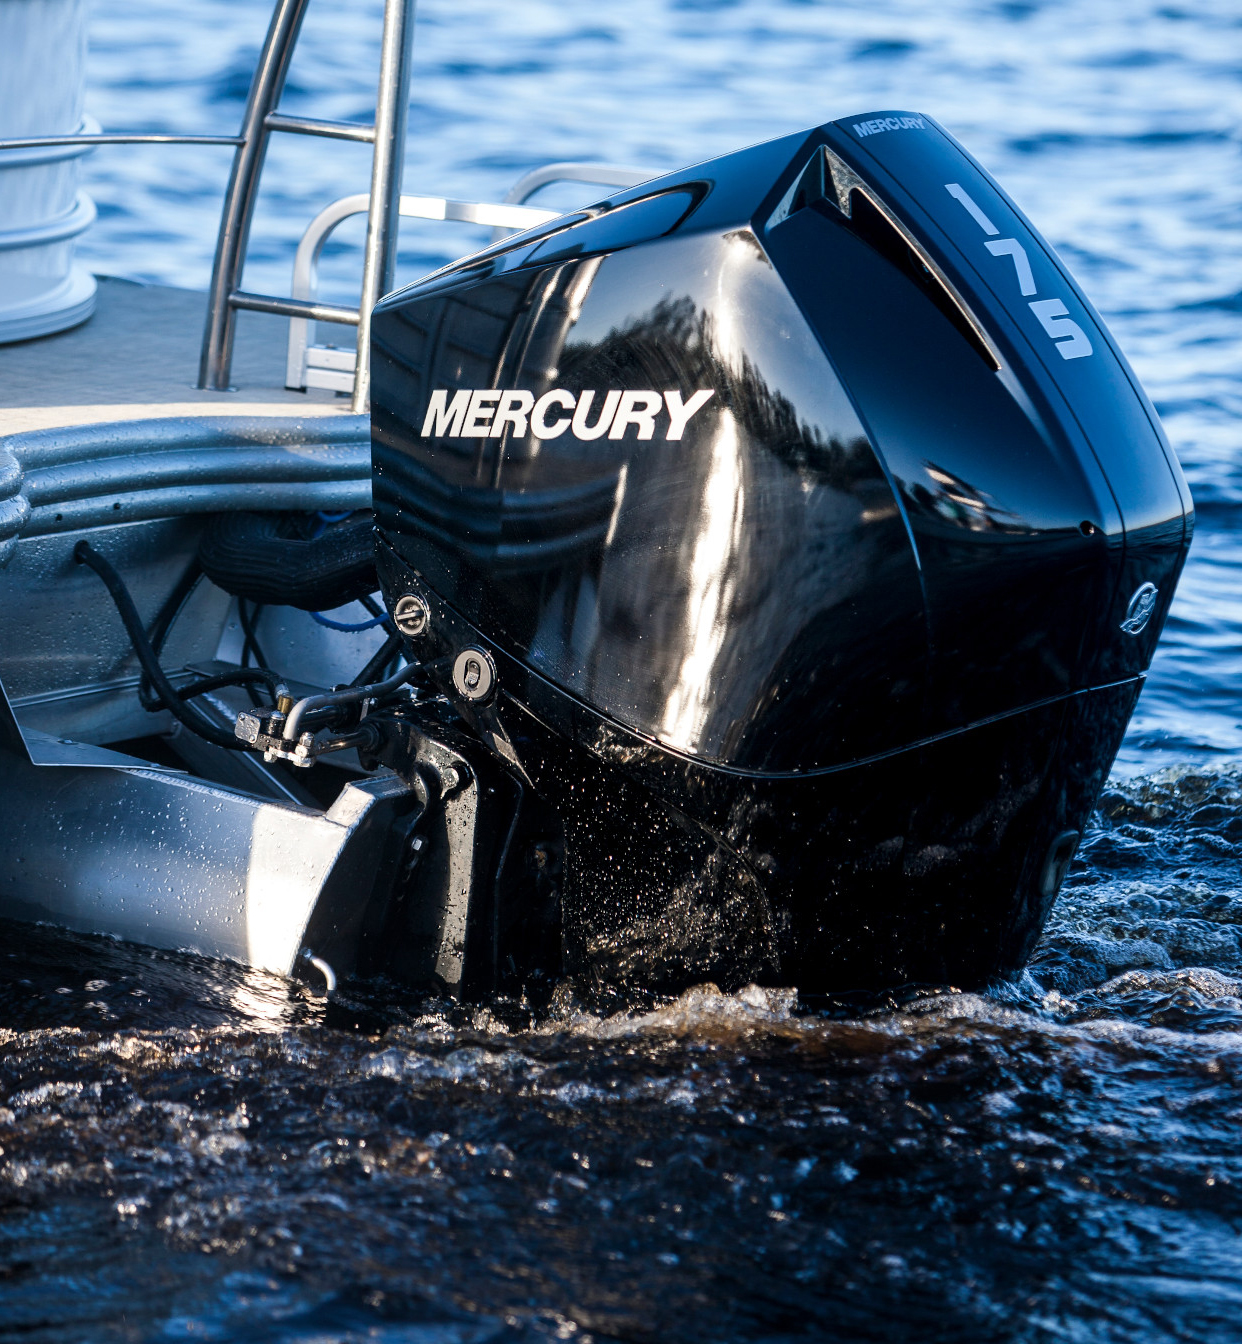 Mercury outboard engine